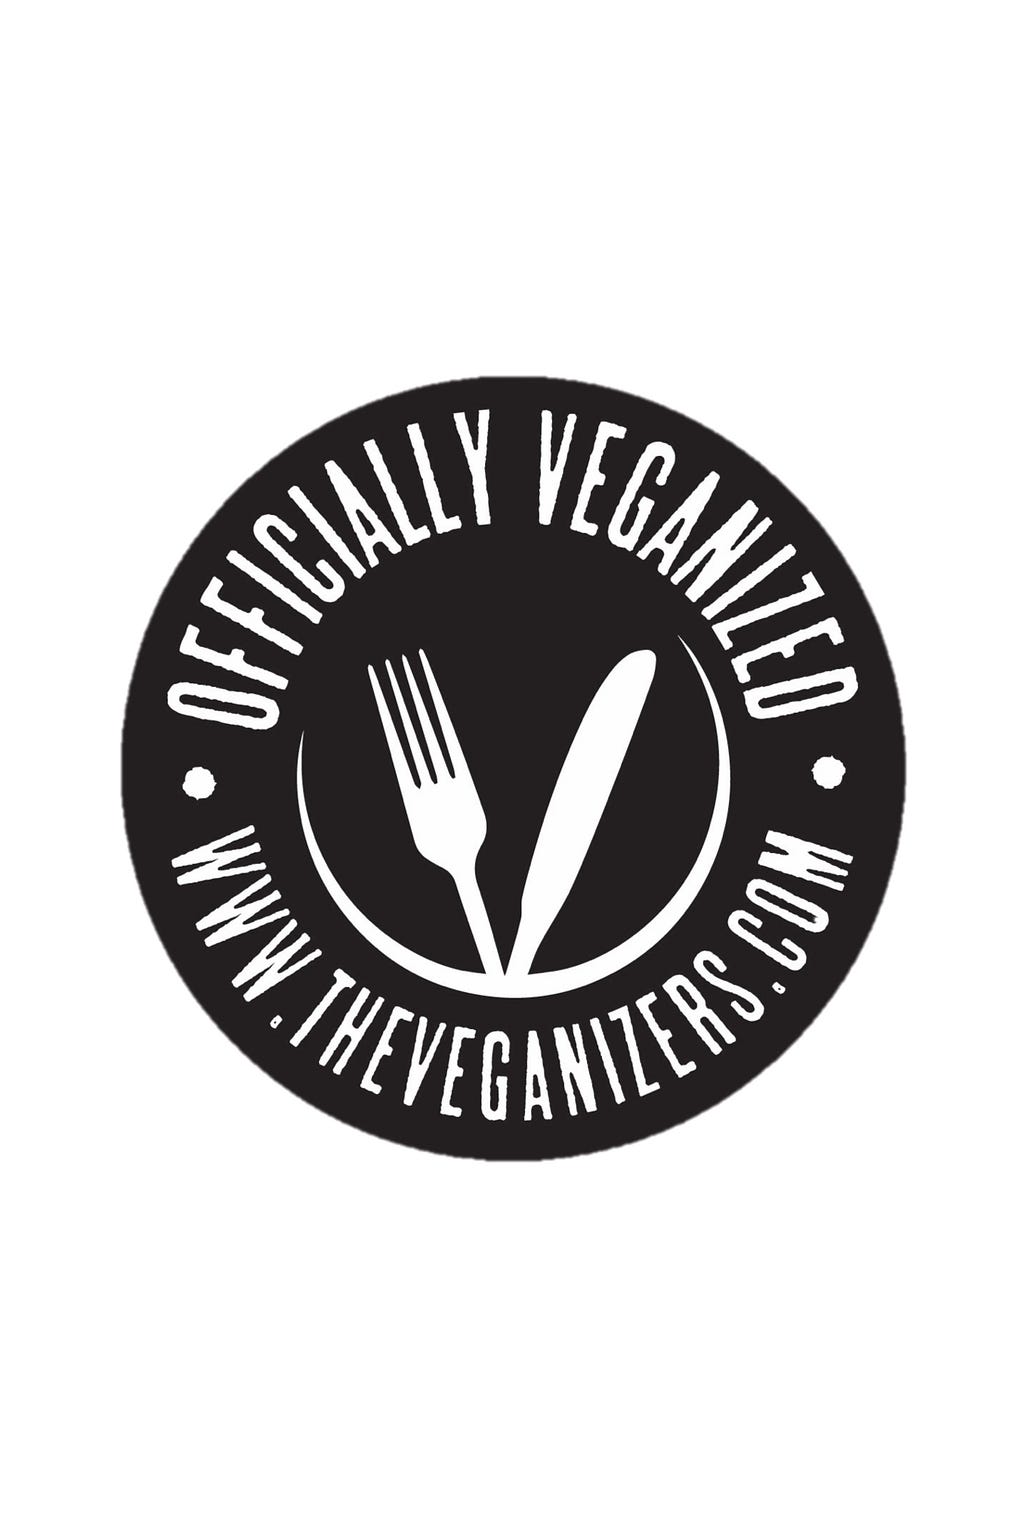 veganized menu veganizer logo